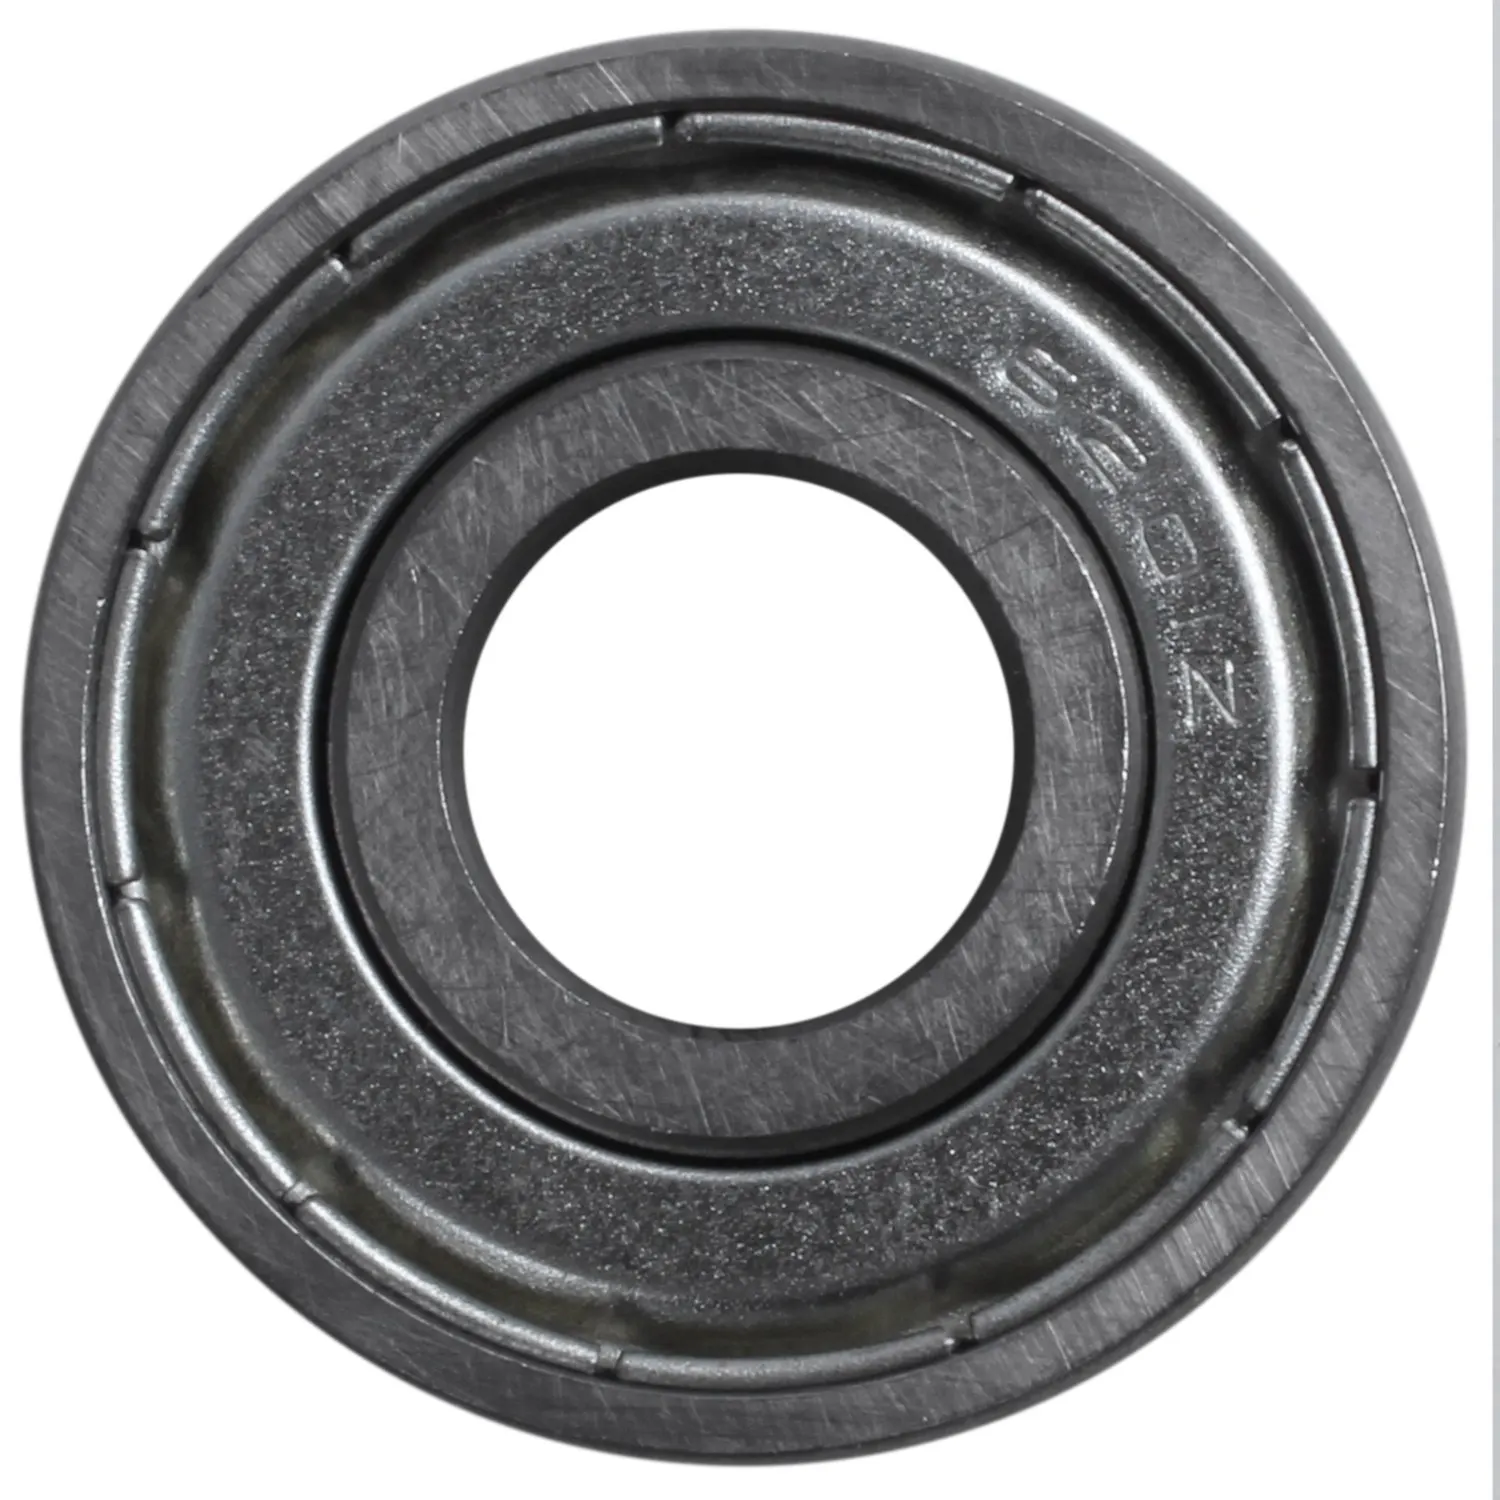 

6201Z deep groove ball bearing metal 12 x 32 x 10 mm sealed